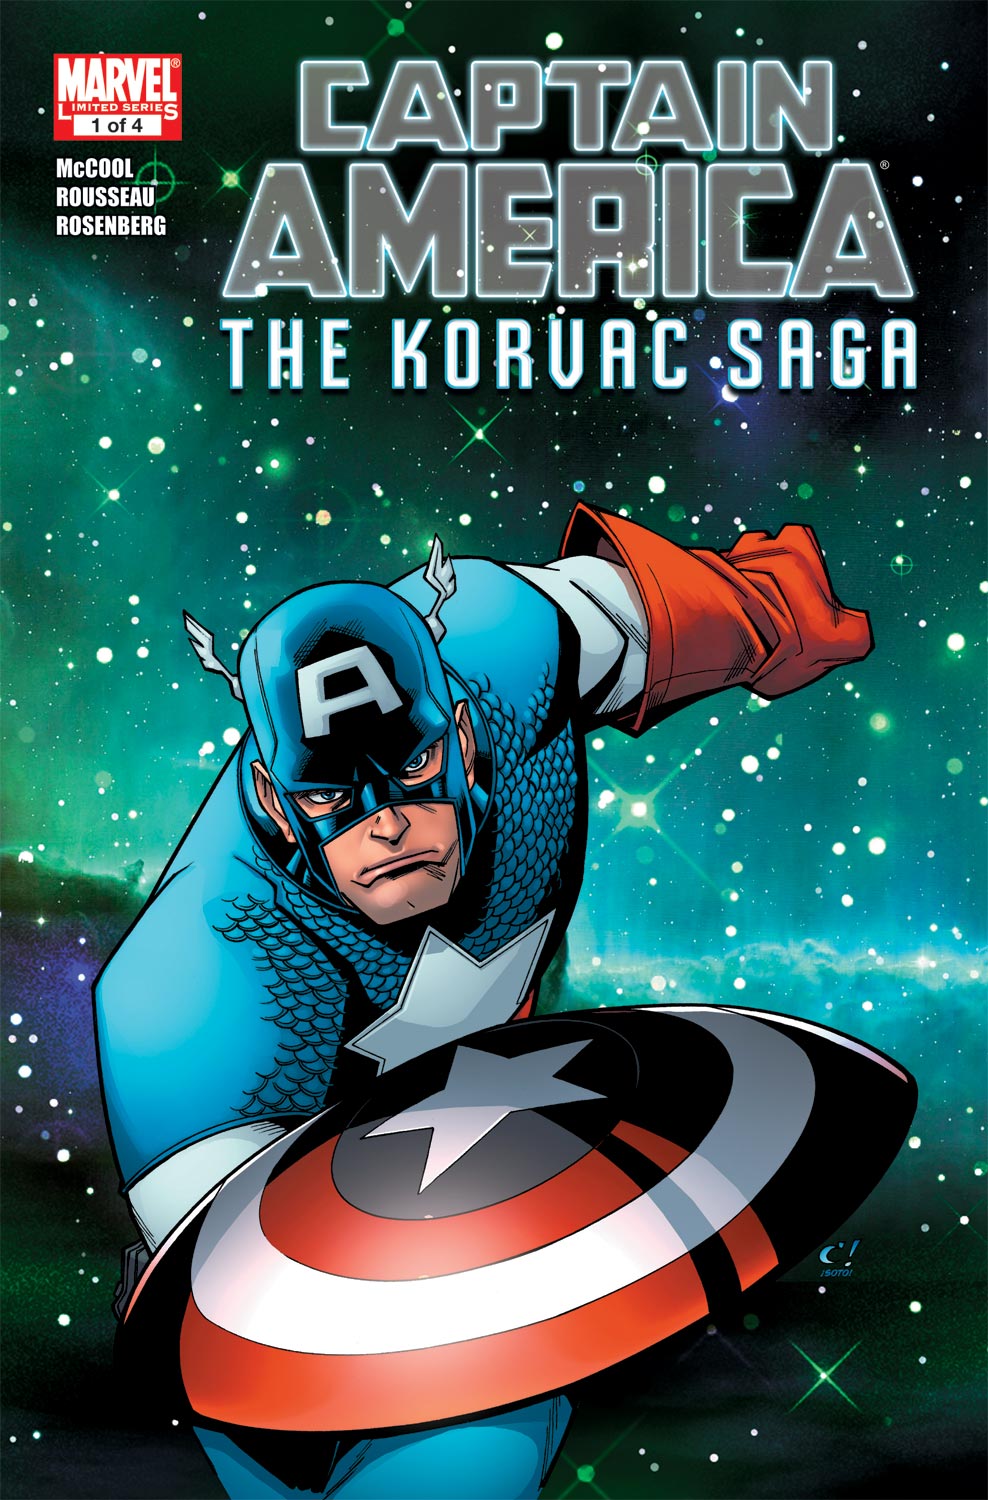 Captain America & the Korvac Saga (2010) #1